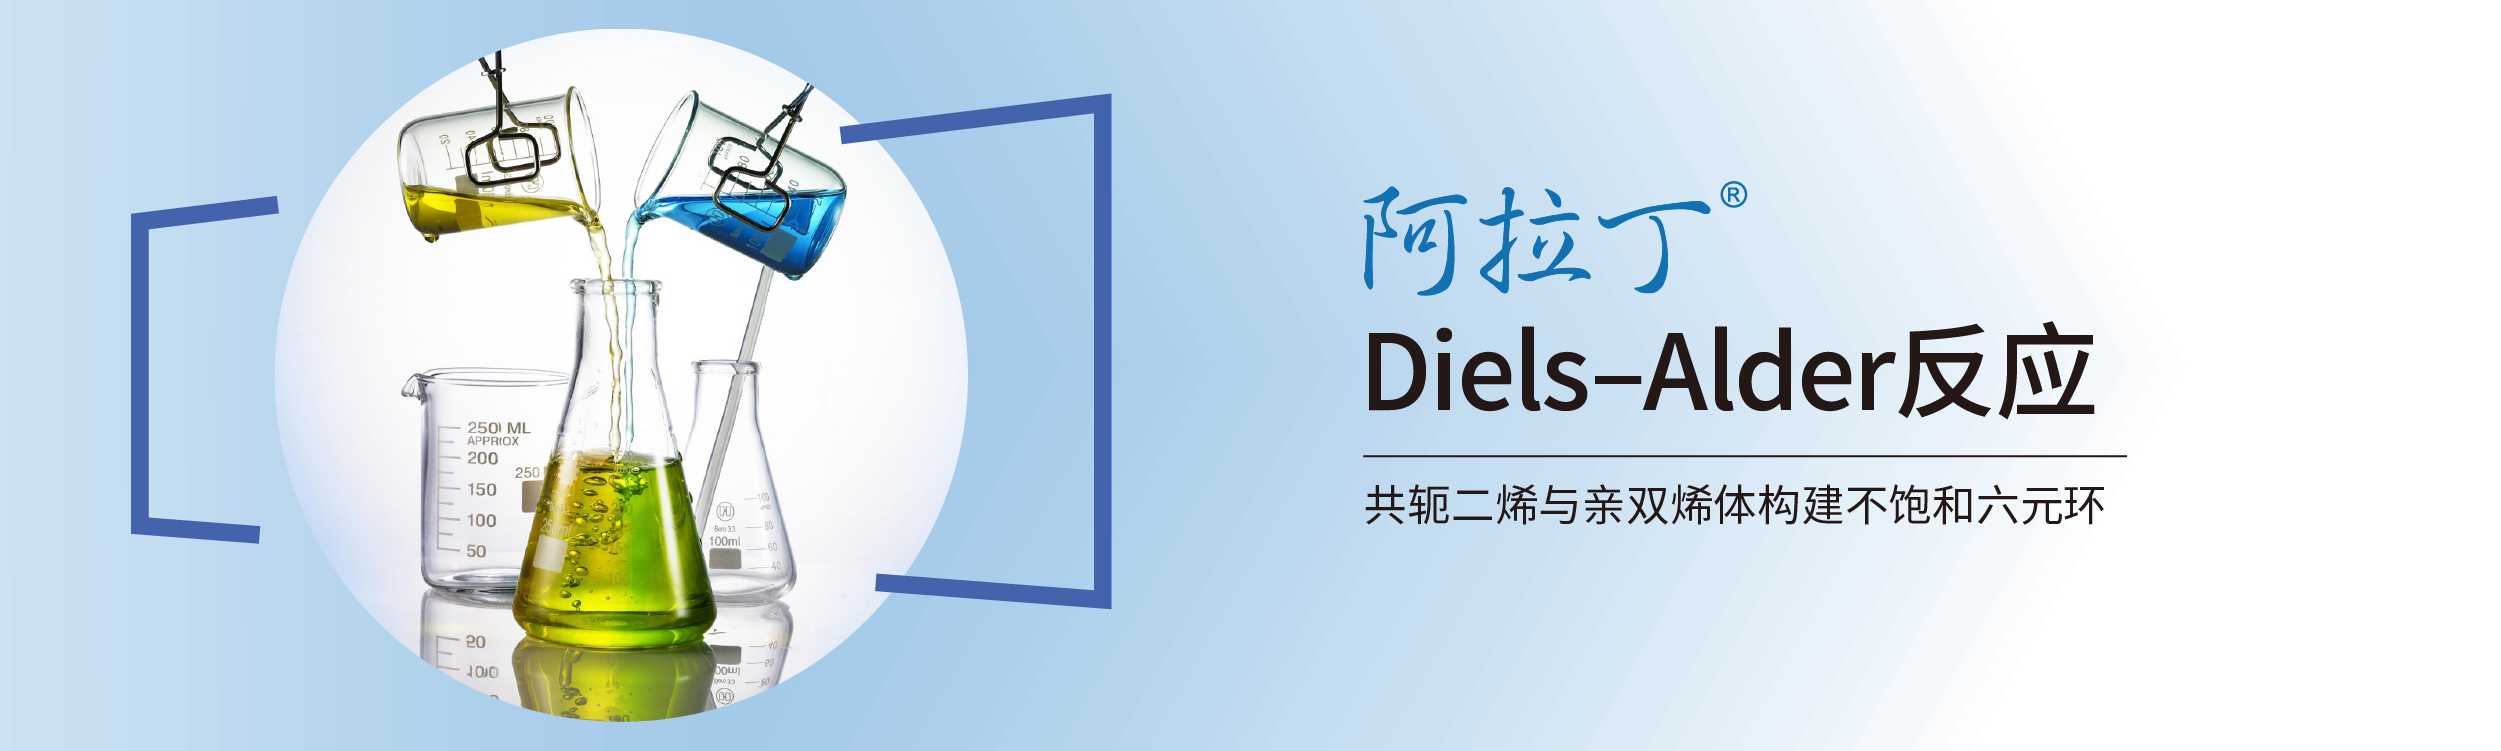 丁香通-阿拉丁Diels–Alder反应.png